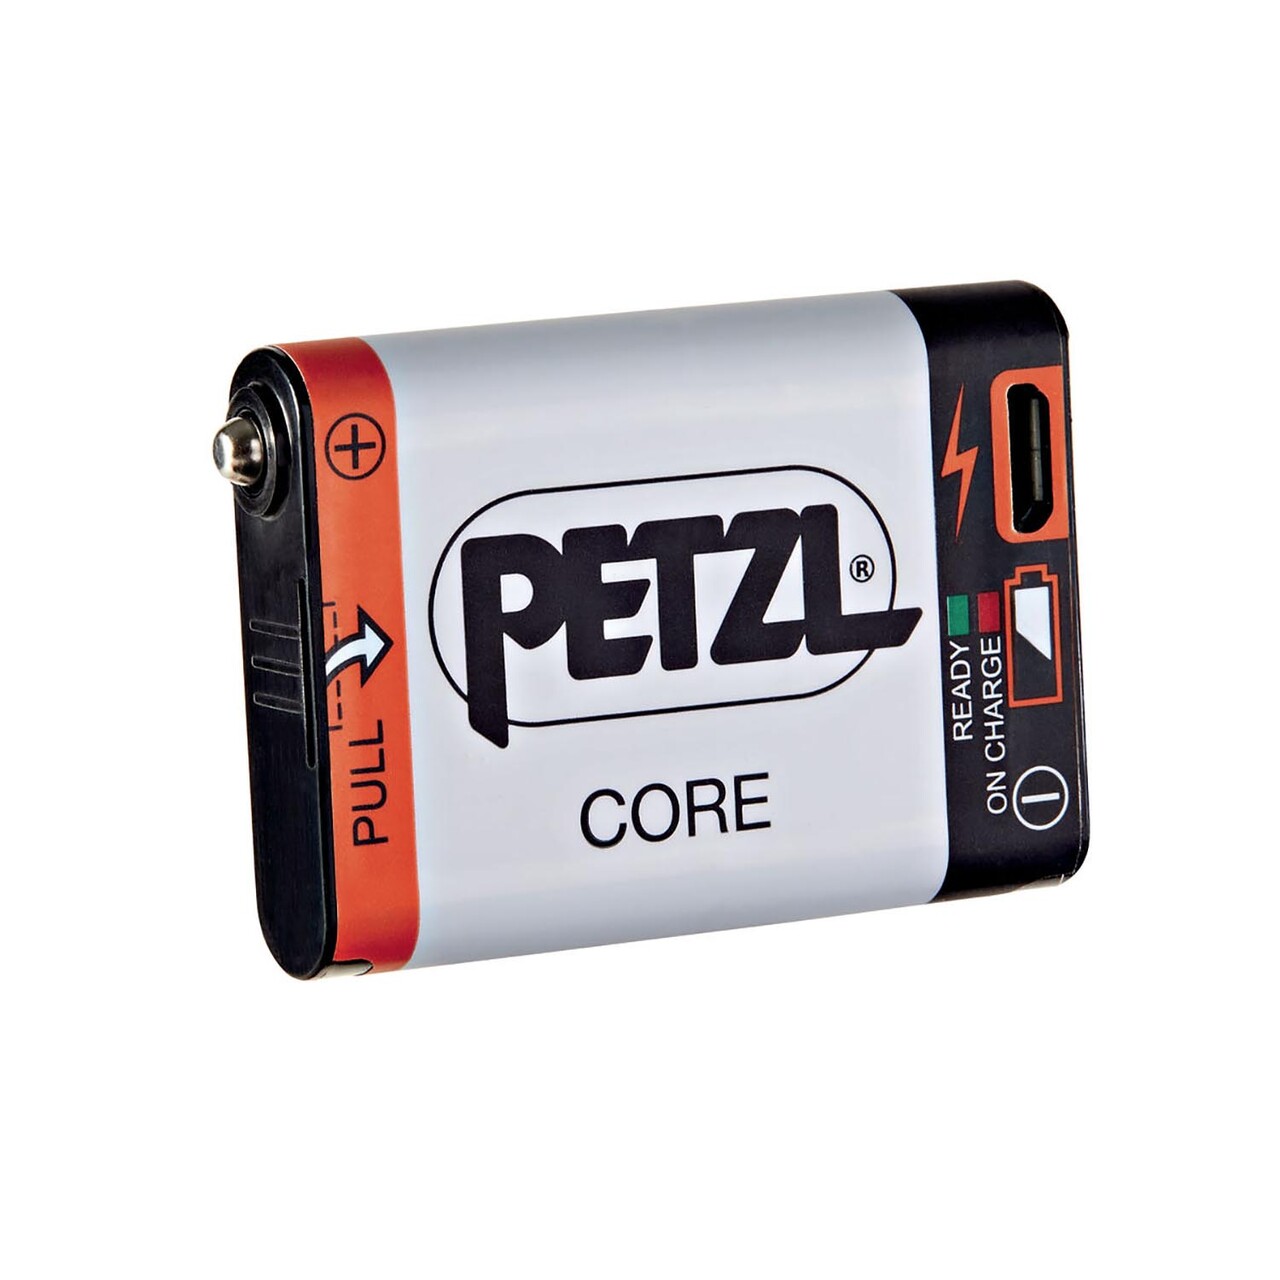 Billede af Petzl Rechargeable Battery Accu Core